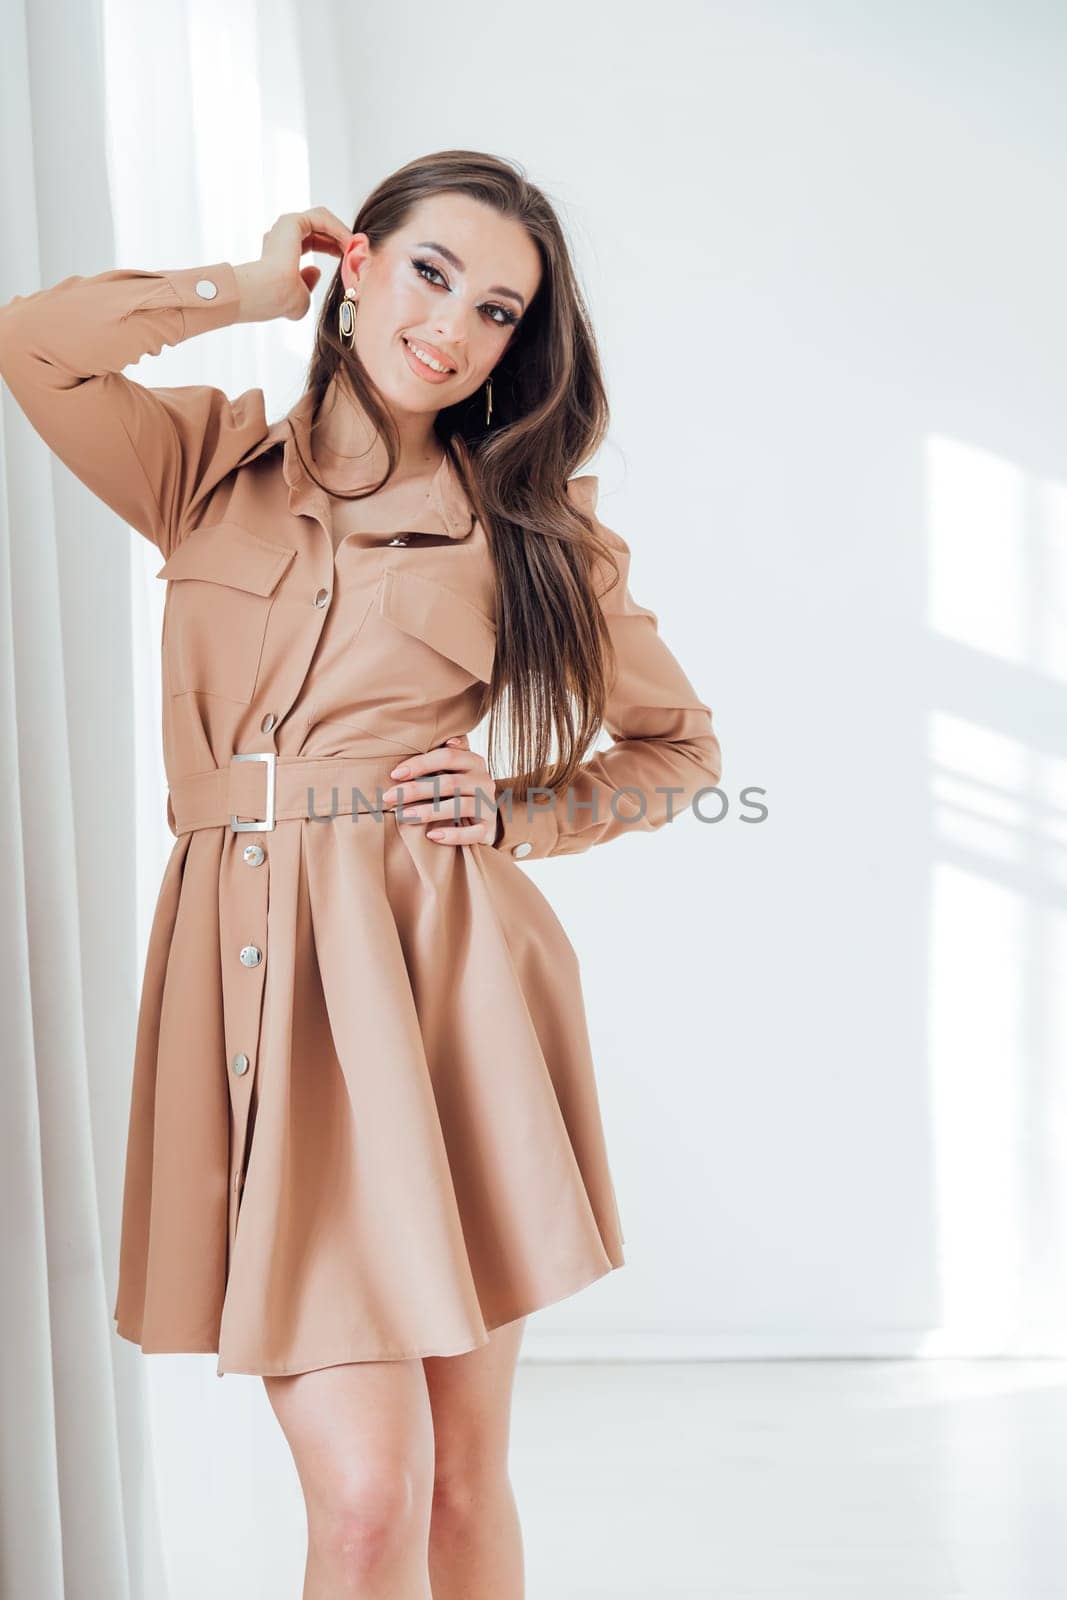 woman in dress posing in bright room